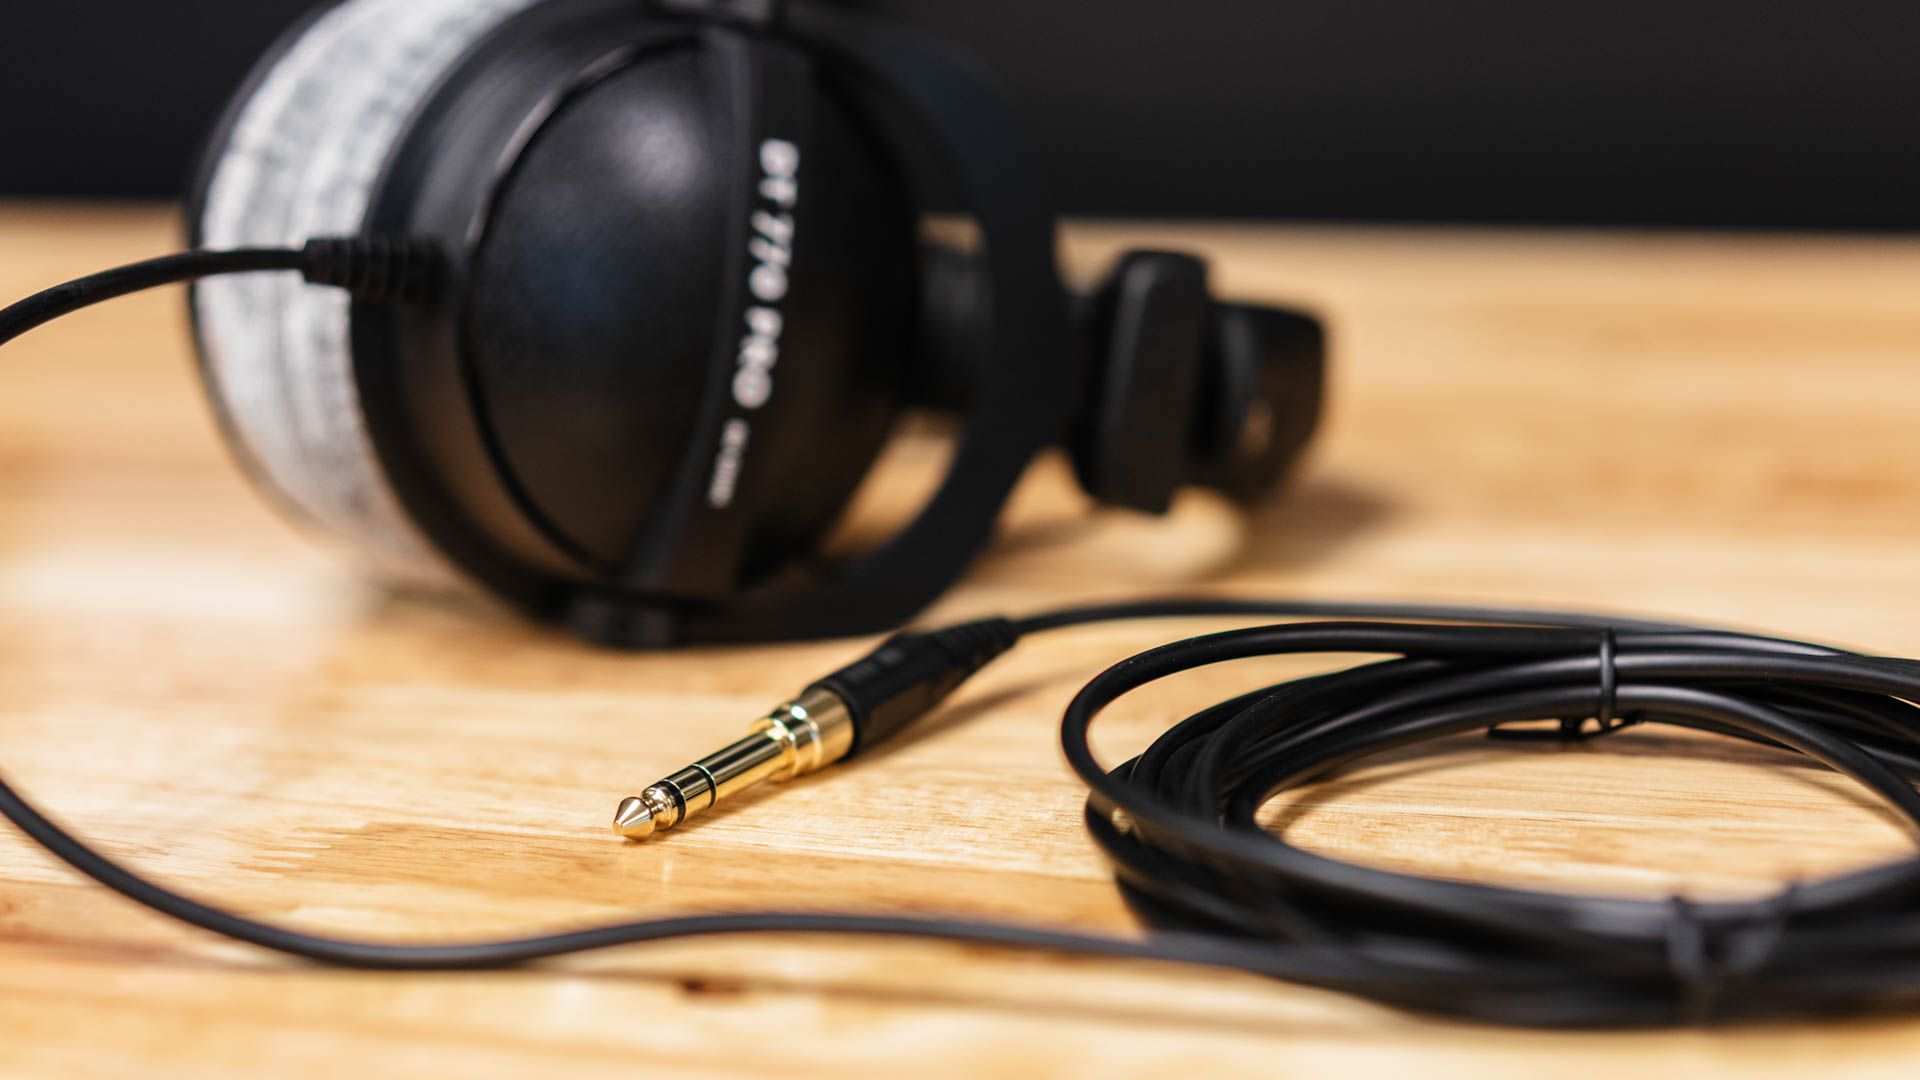 The gold plated jack plug on the Beyerdynamic DT 770 PRO headphones